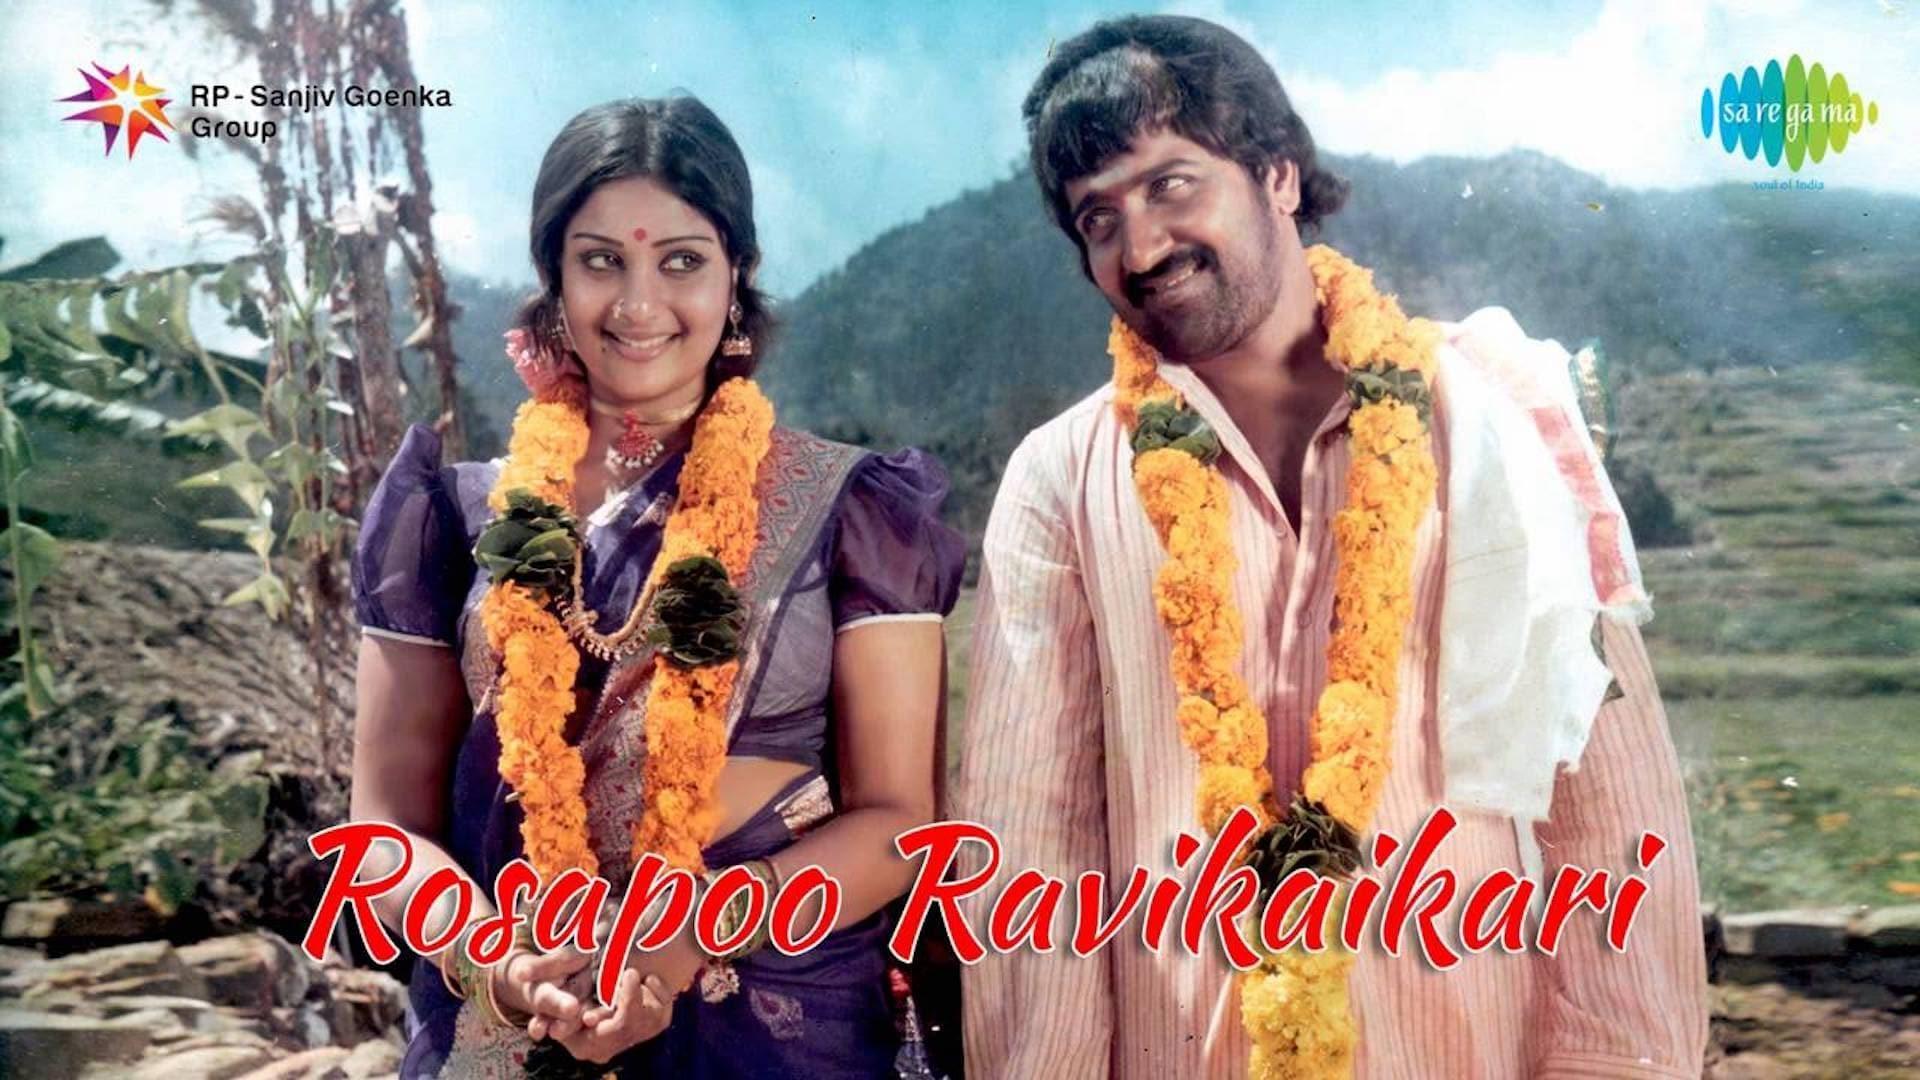 Rosapoo Ravikkaikari backdrop